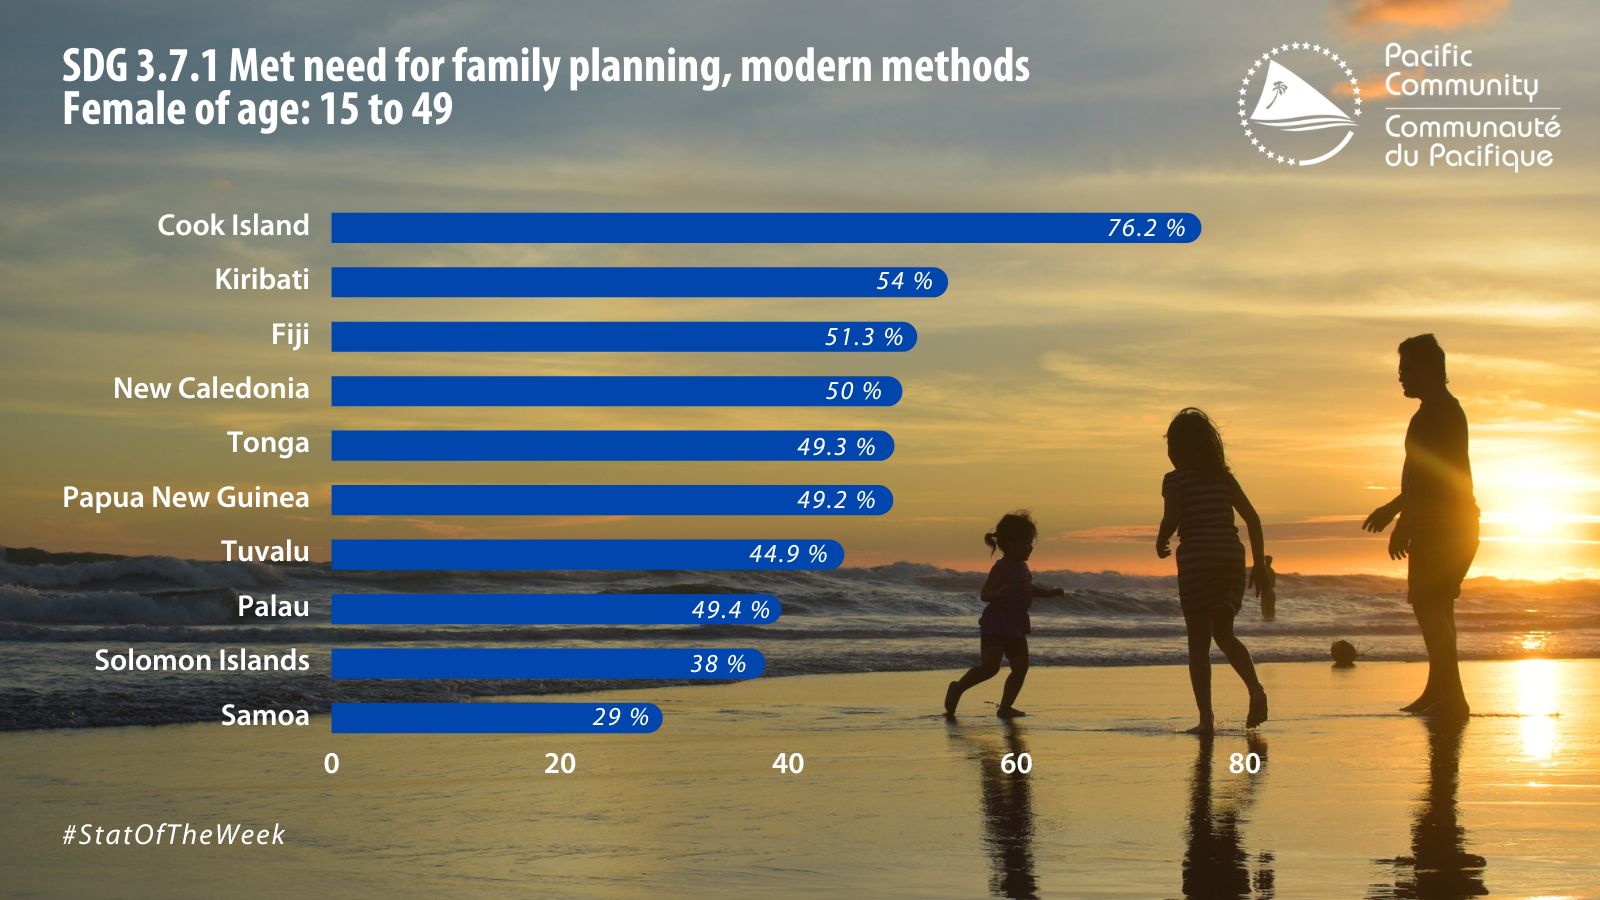 SDG 3.7.1 Met need for family planning, modern methods - female of age: 15 to 49 